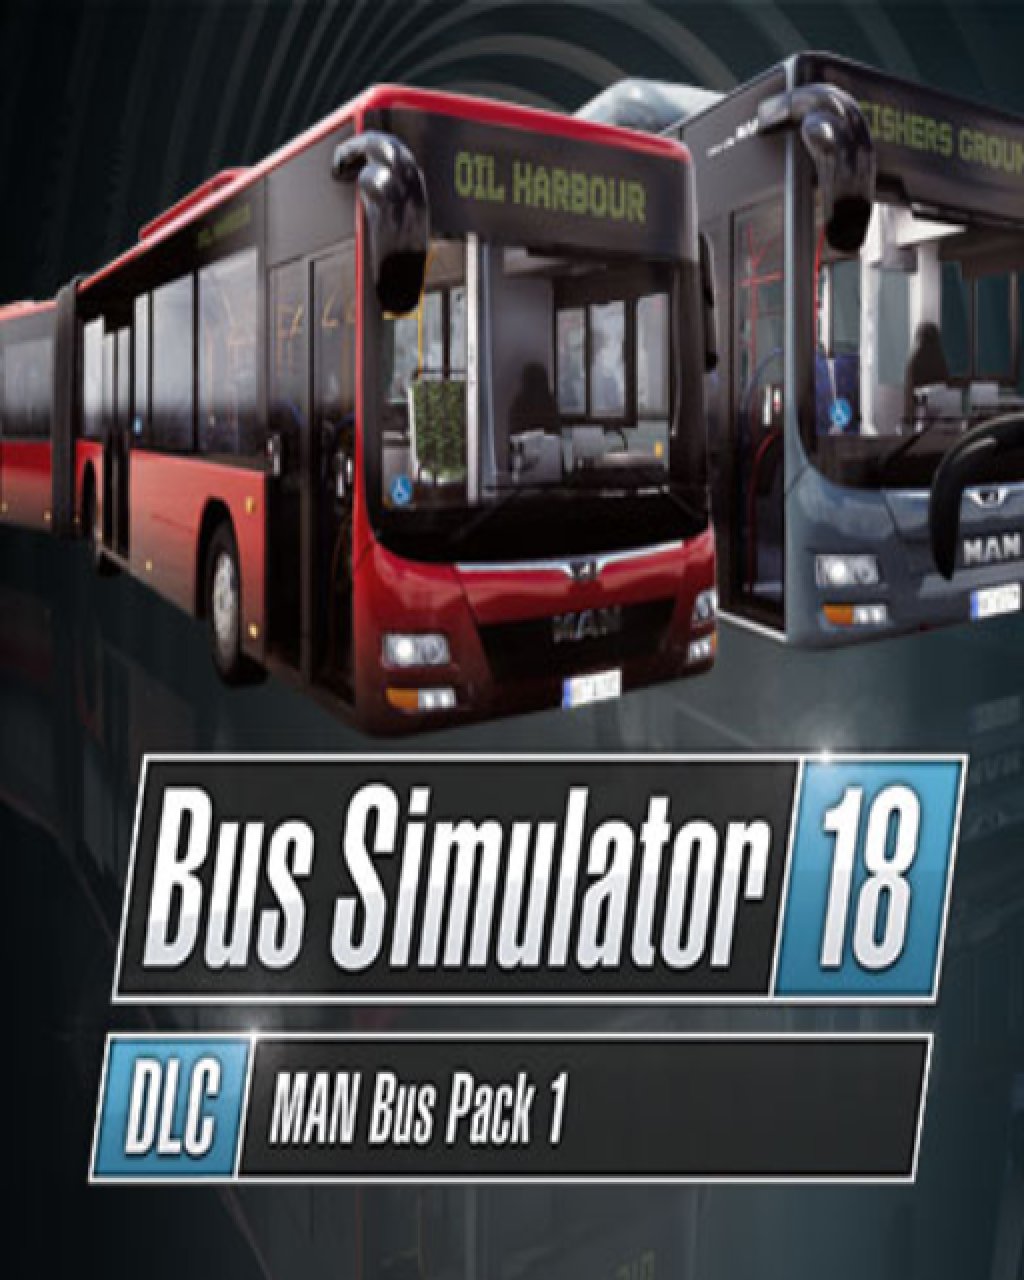 ESD Bus Simulator 18 MAN Bus Pack 1